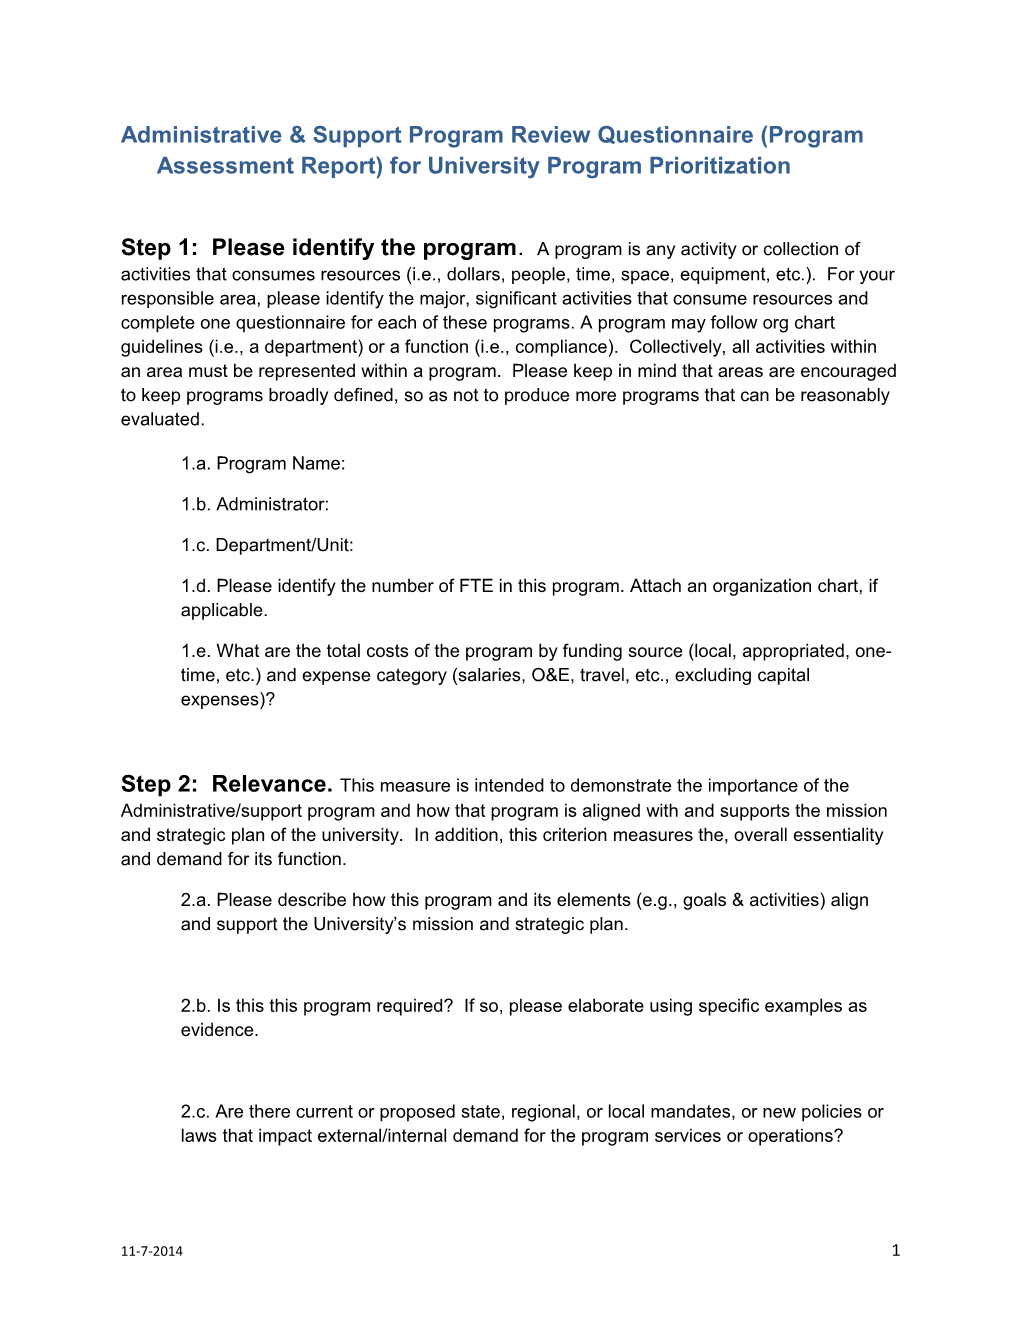 Administrative & Support Program Review Questionnaire (Program Assessment Report) for University